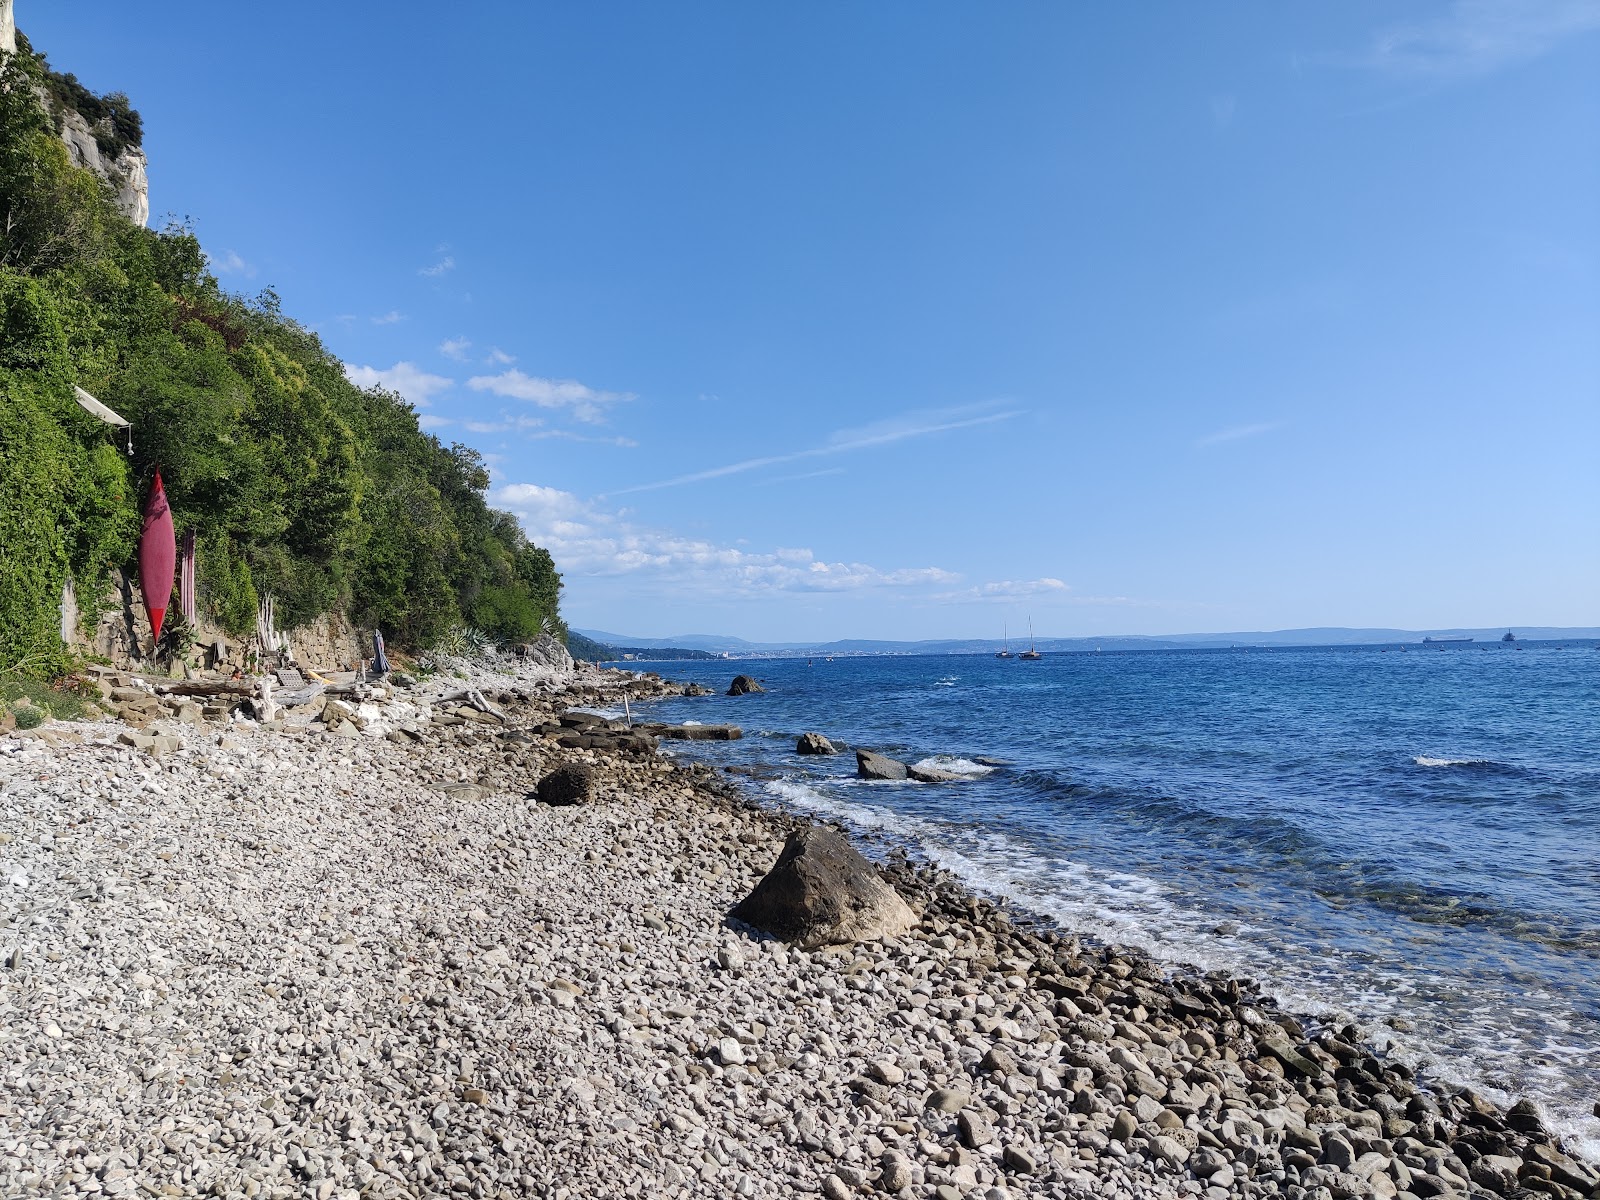 Photo of Spiaggia dei Filtri FKK with gray pebble surface